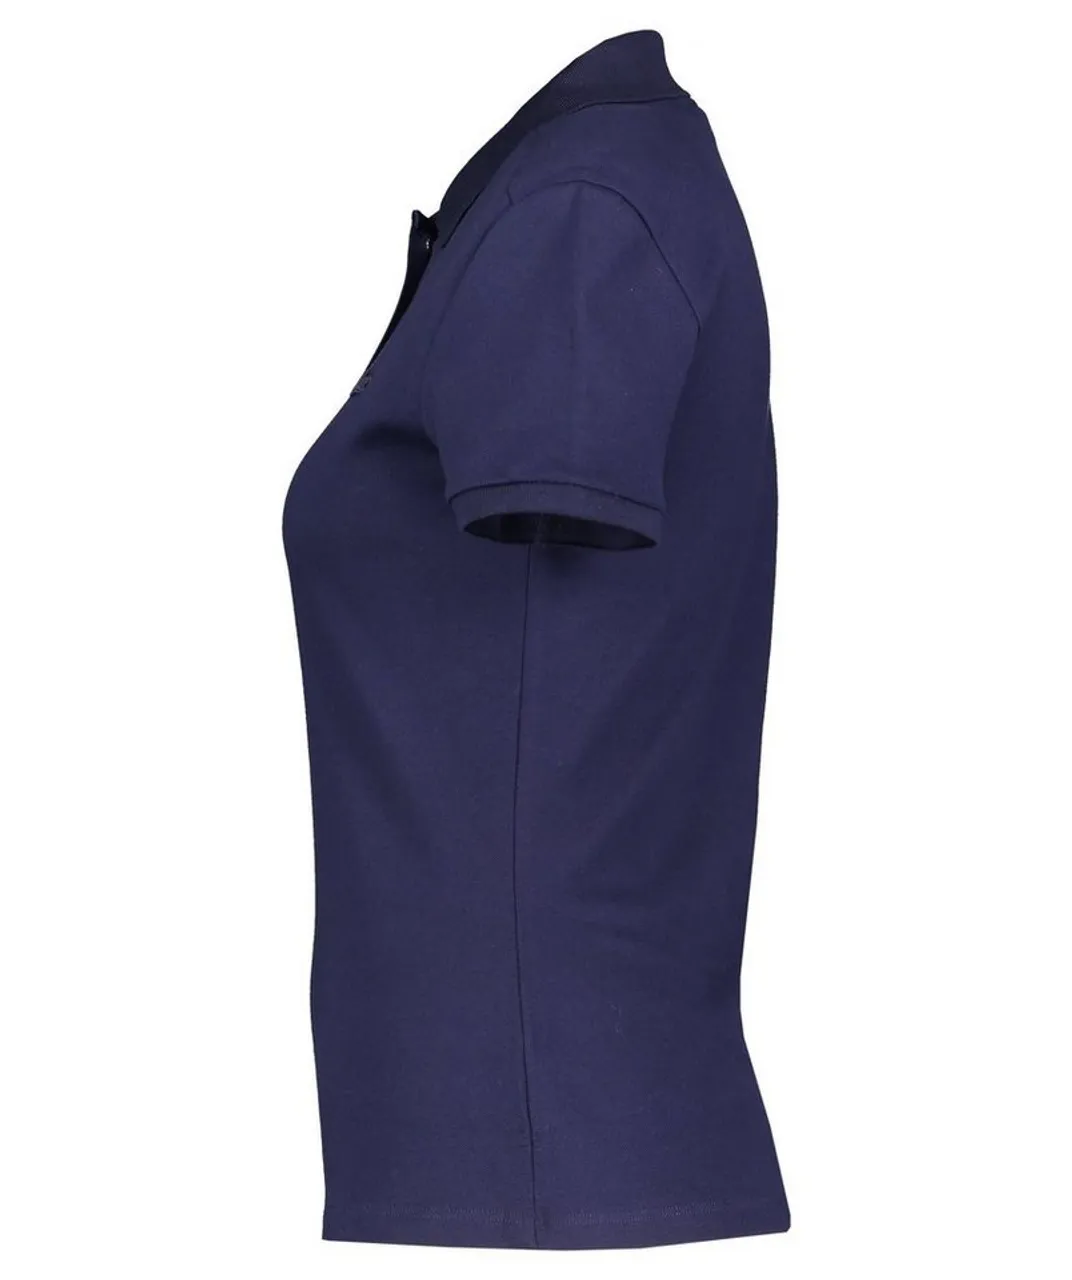 Lacoste Poloshirt Damen Poloshirt Slim Fit Kurzarm (1-tlg)